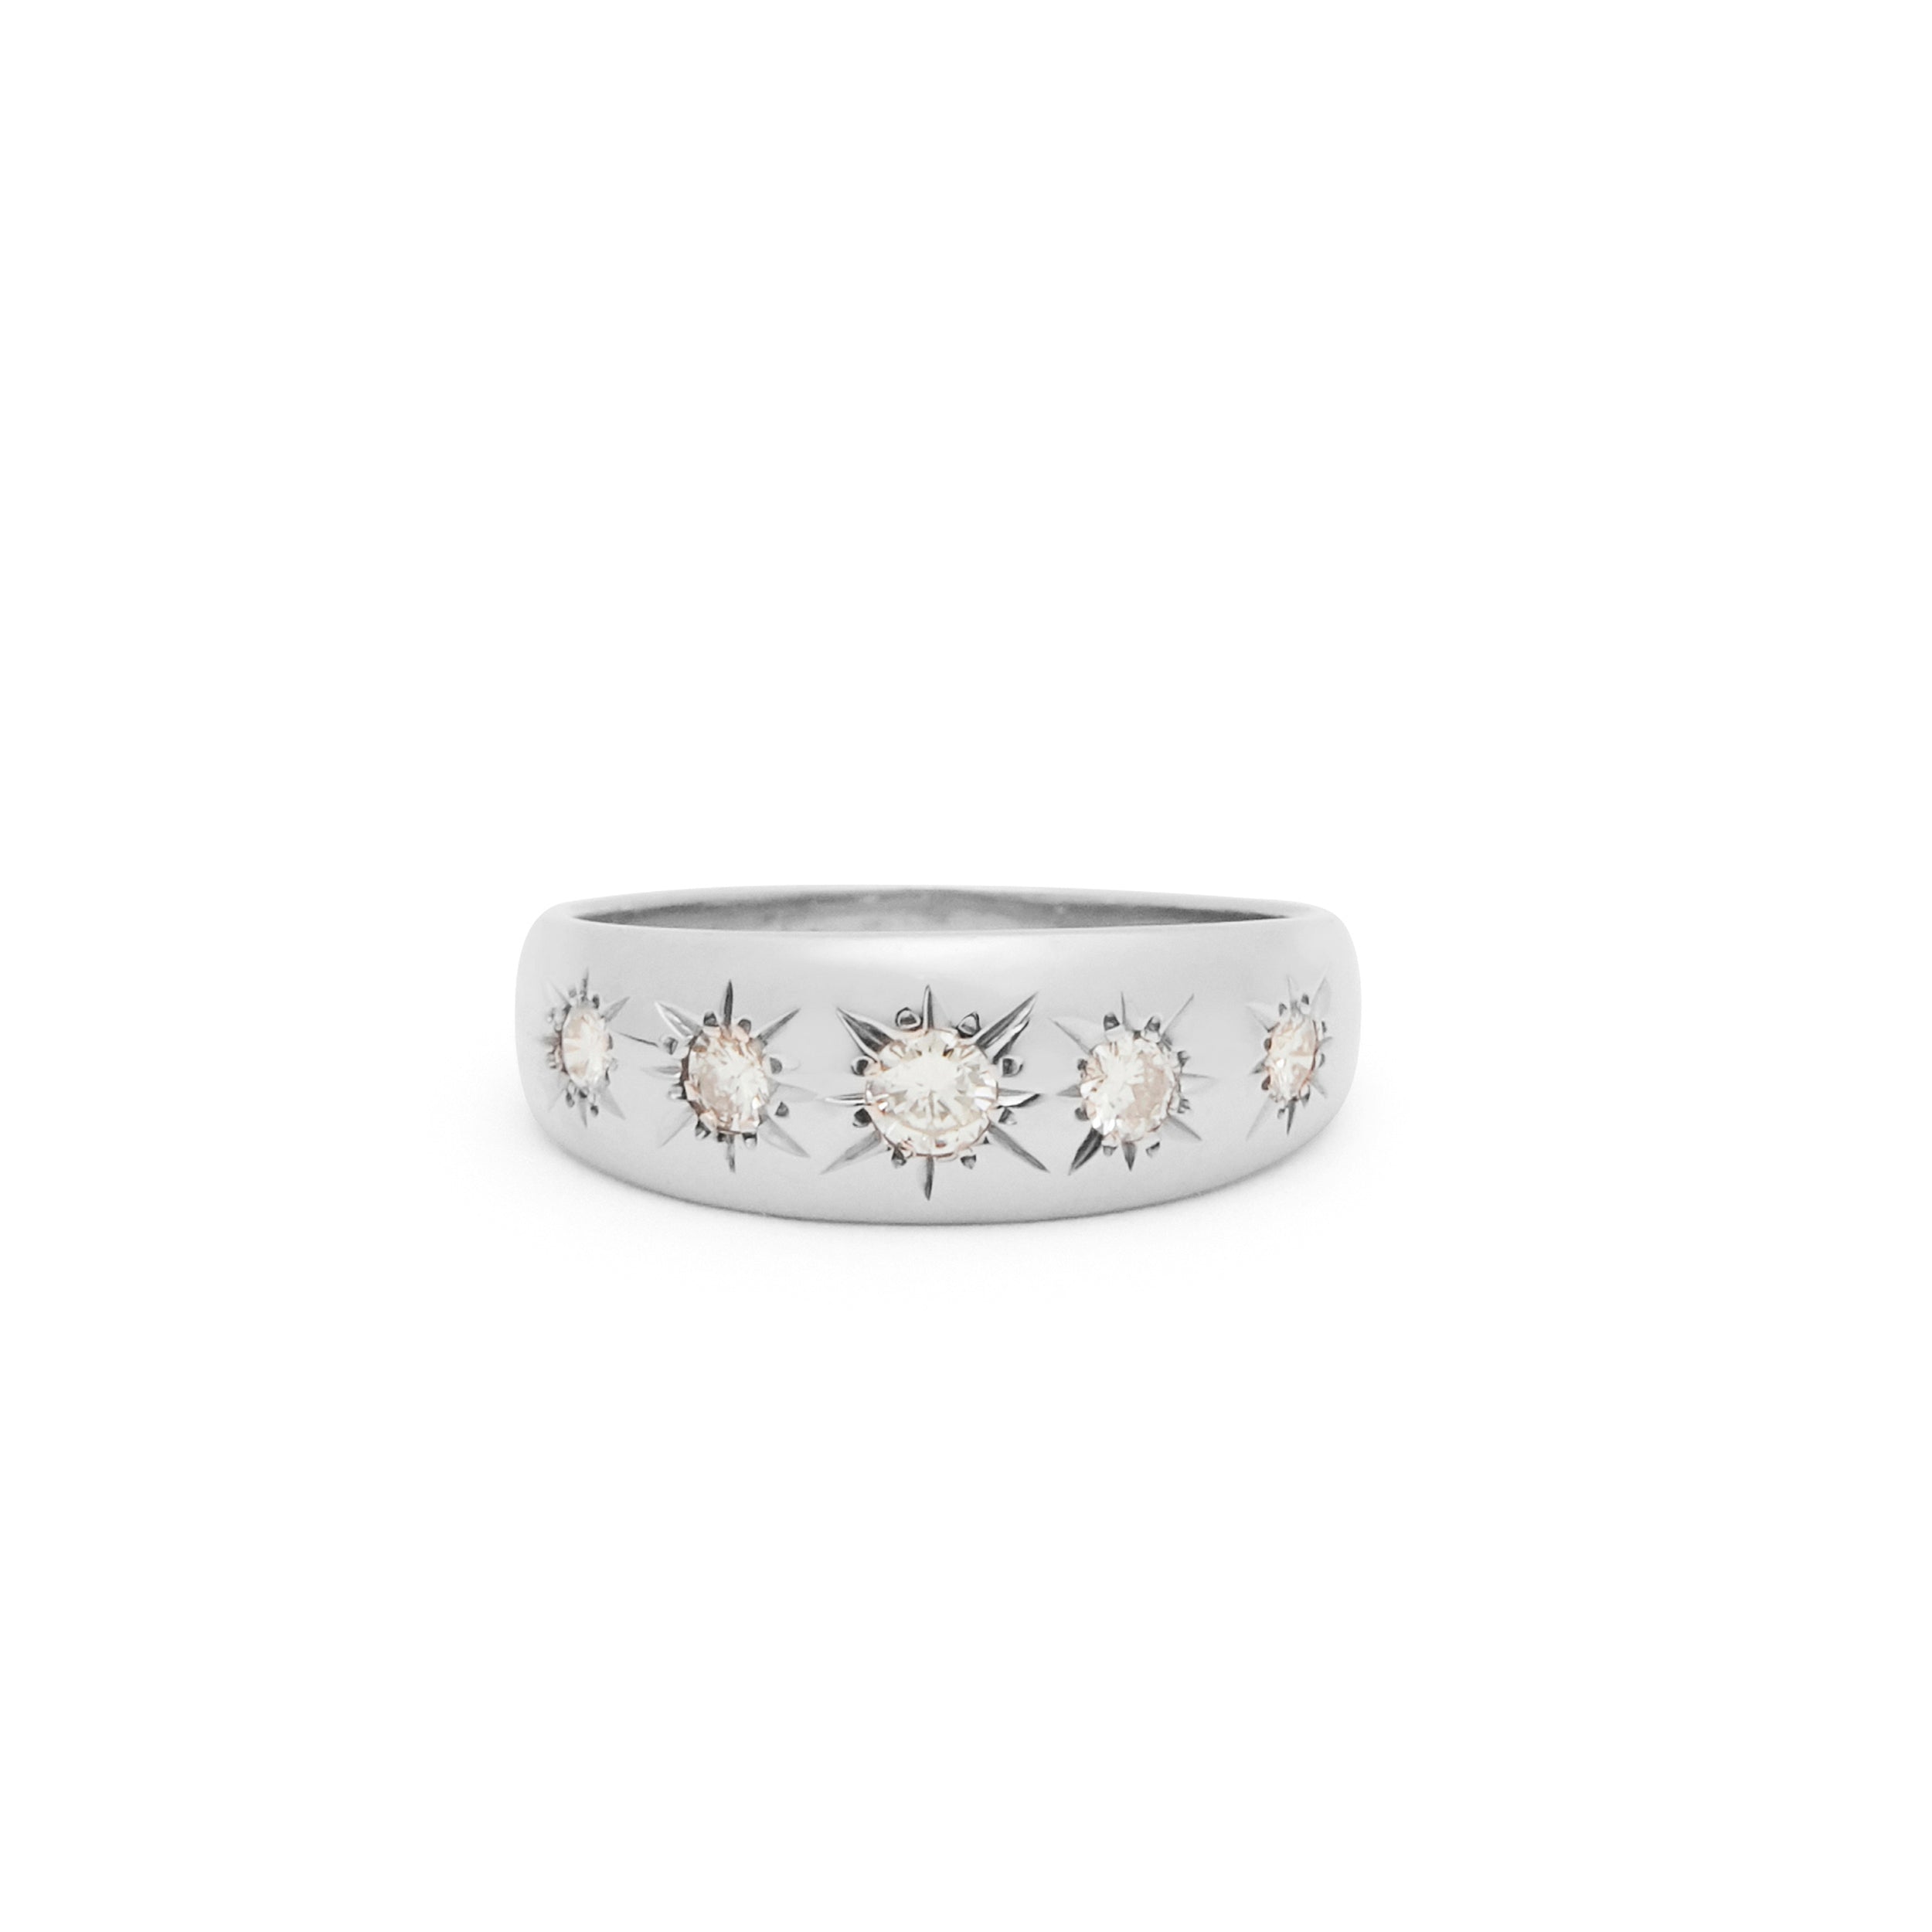 The F&B Diamond 5-Starburst Ring